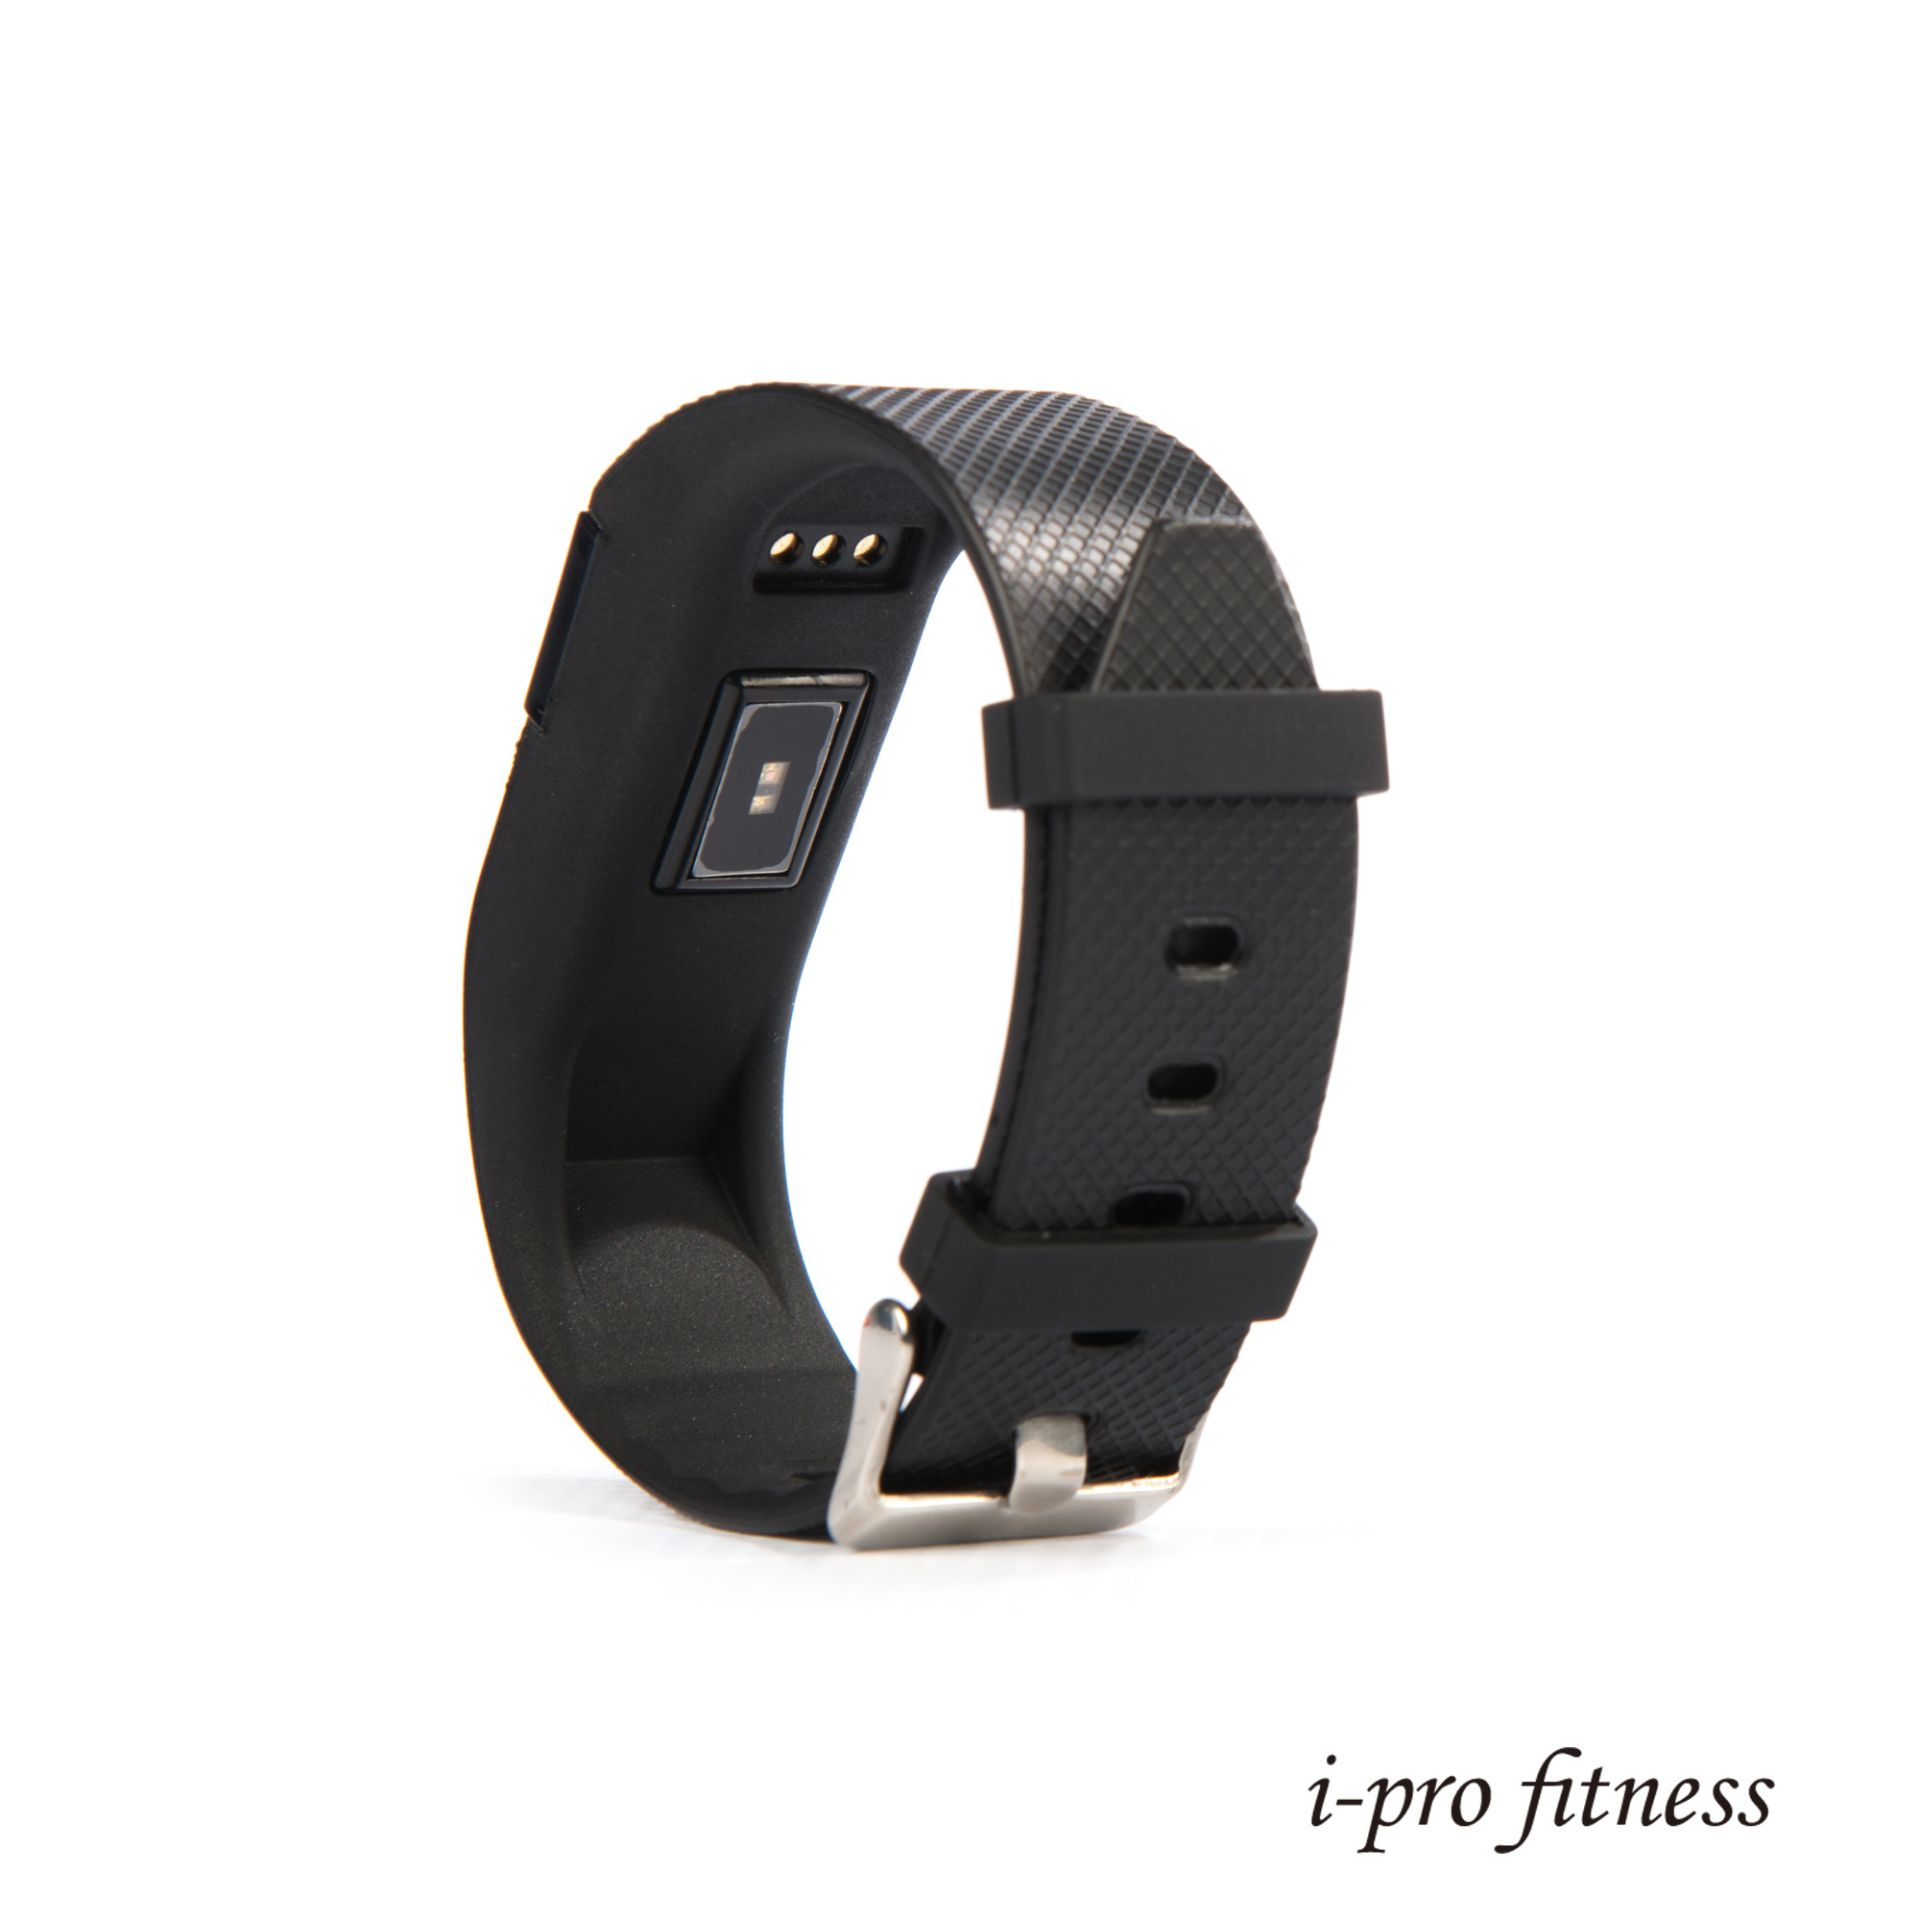 Fitness Tracker i-pro fitness, Bluetooth 4.0 Sports Smart Bracelet, Heart Rate Monitor & Pedometer. - Bild 6 aus 8